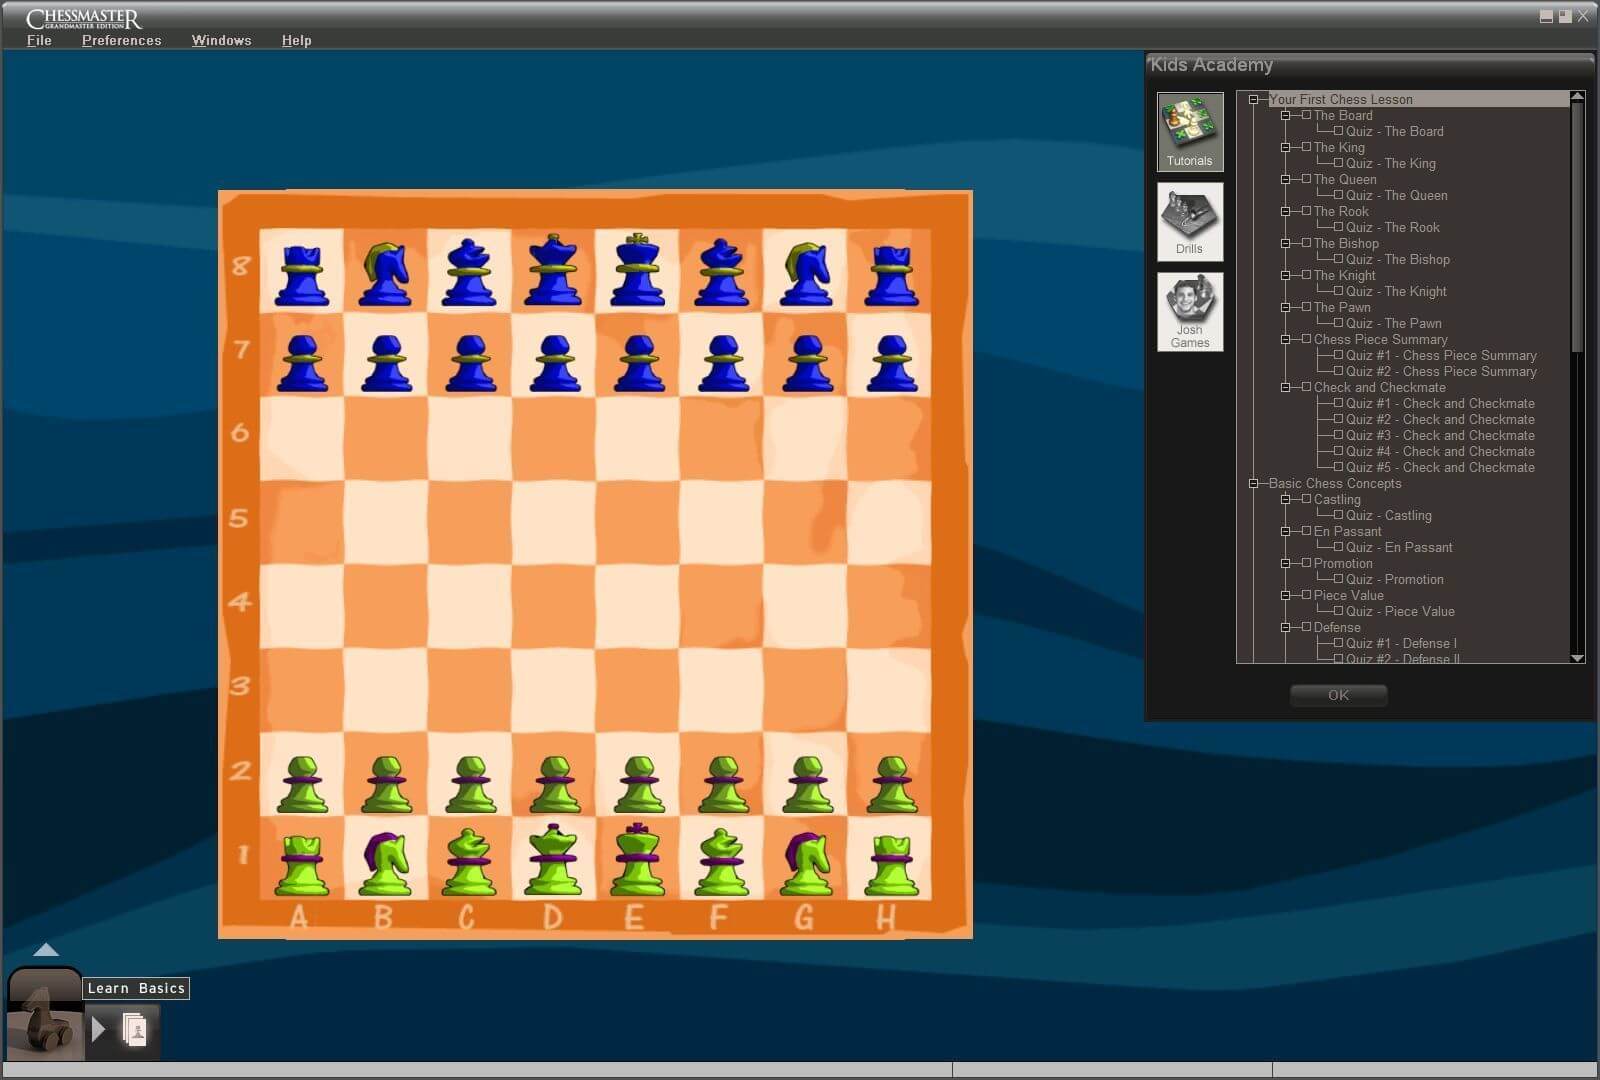 Chessmaster: Grandmaster Edition - GameSpot